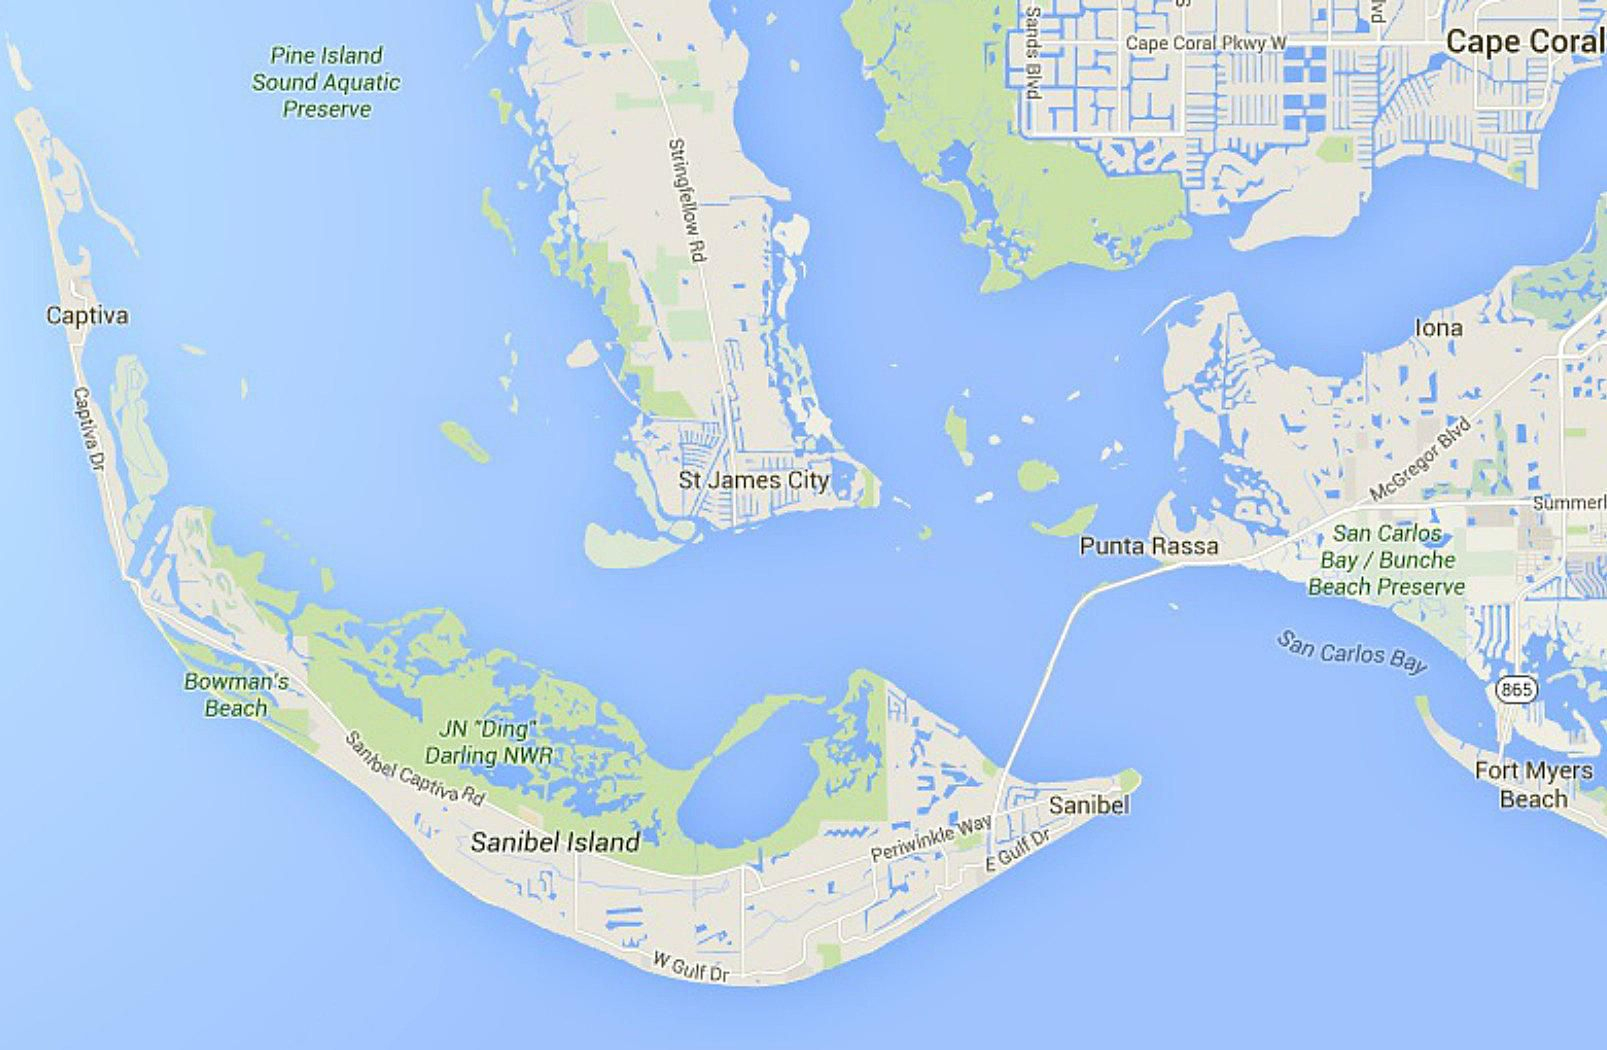 Maps Of Florida: Orlando, Tampa, Miami, Keys, And More - Florida Keys Islands Map